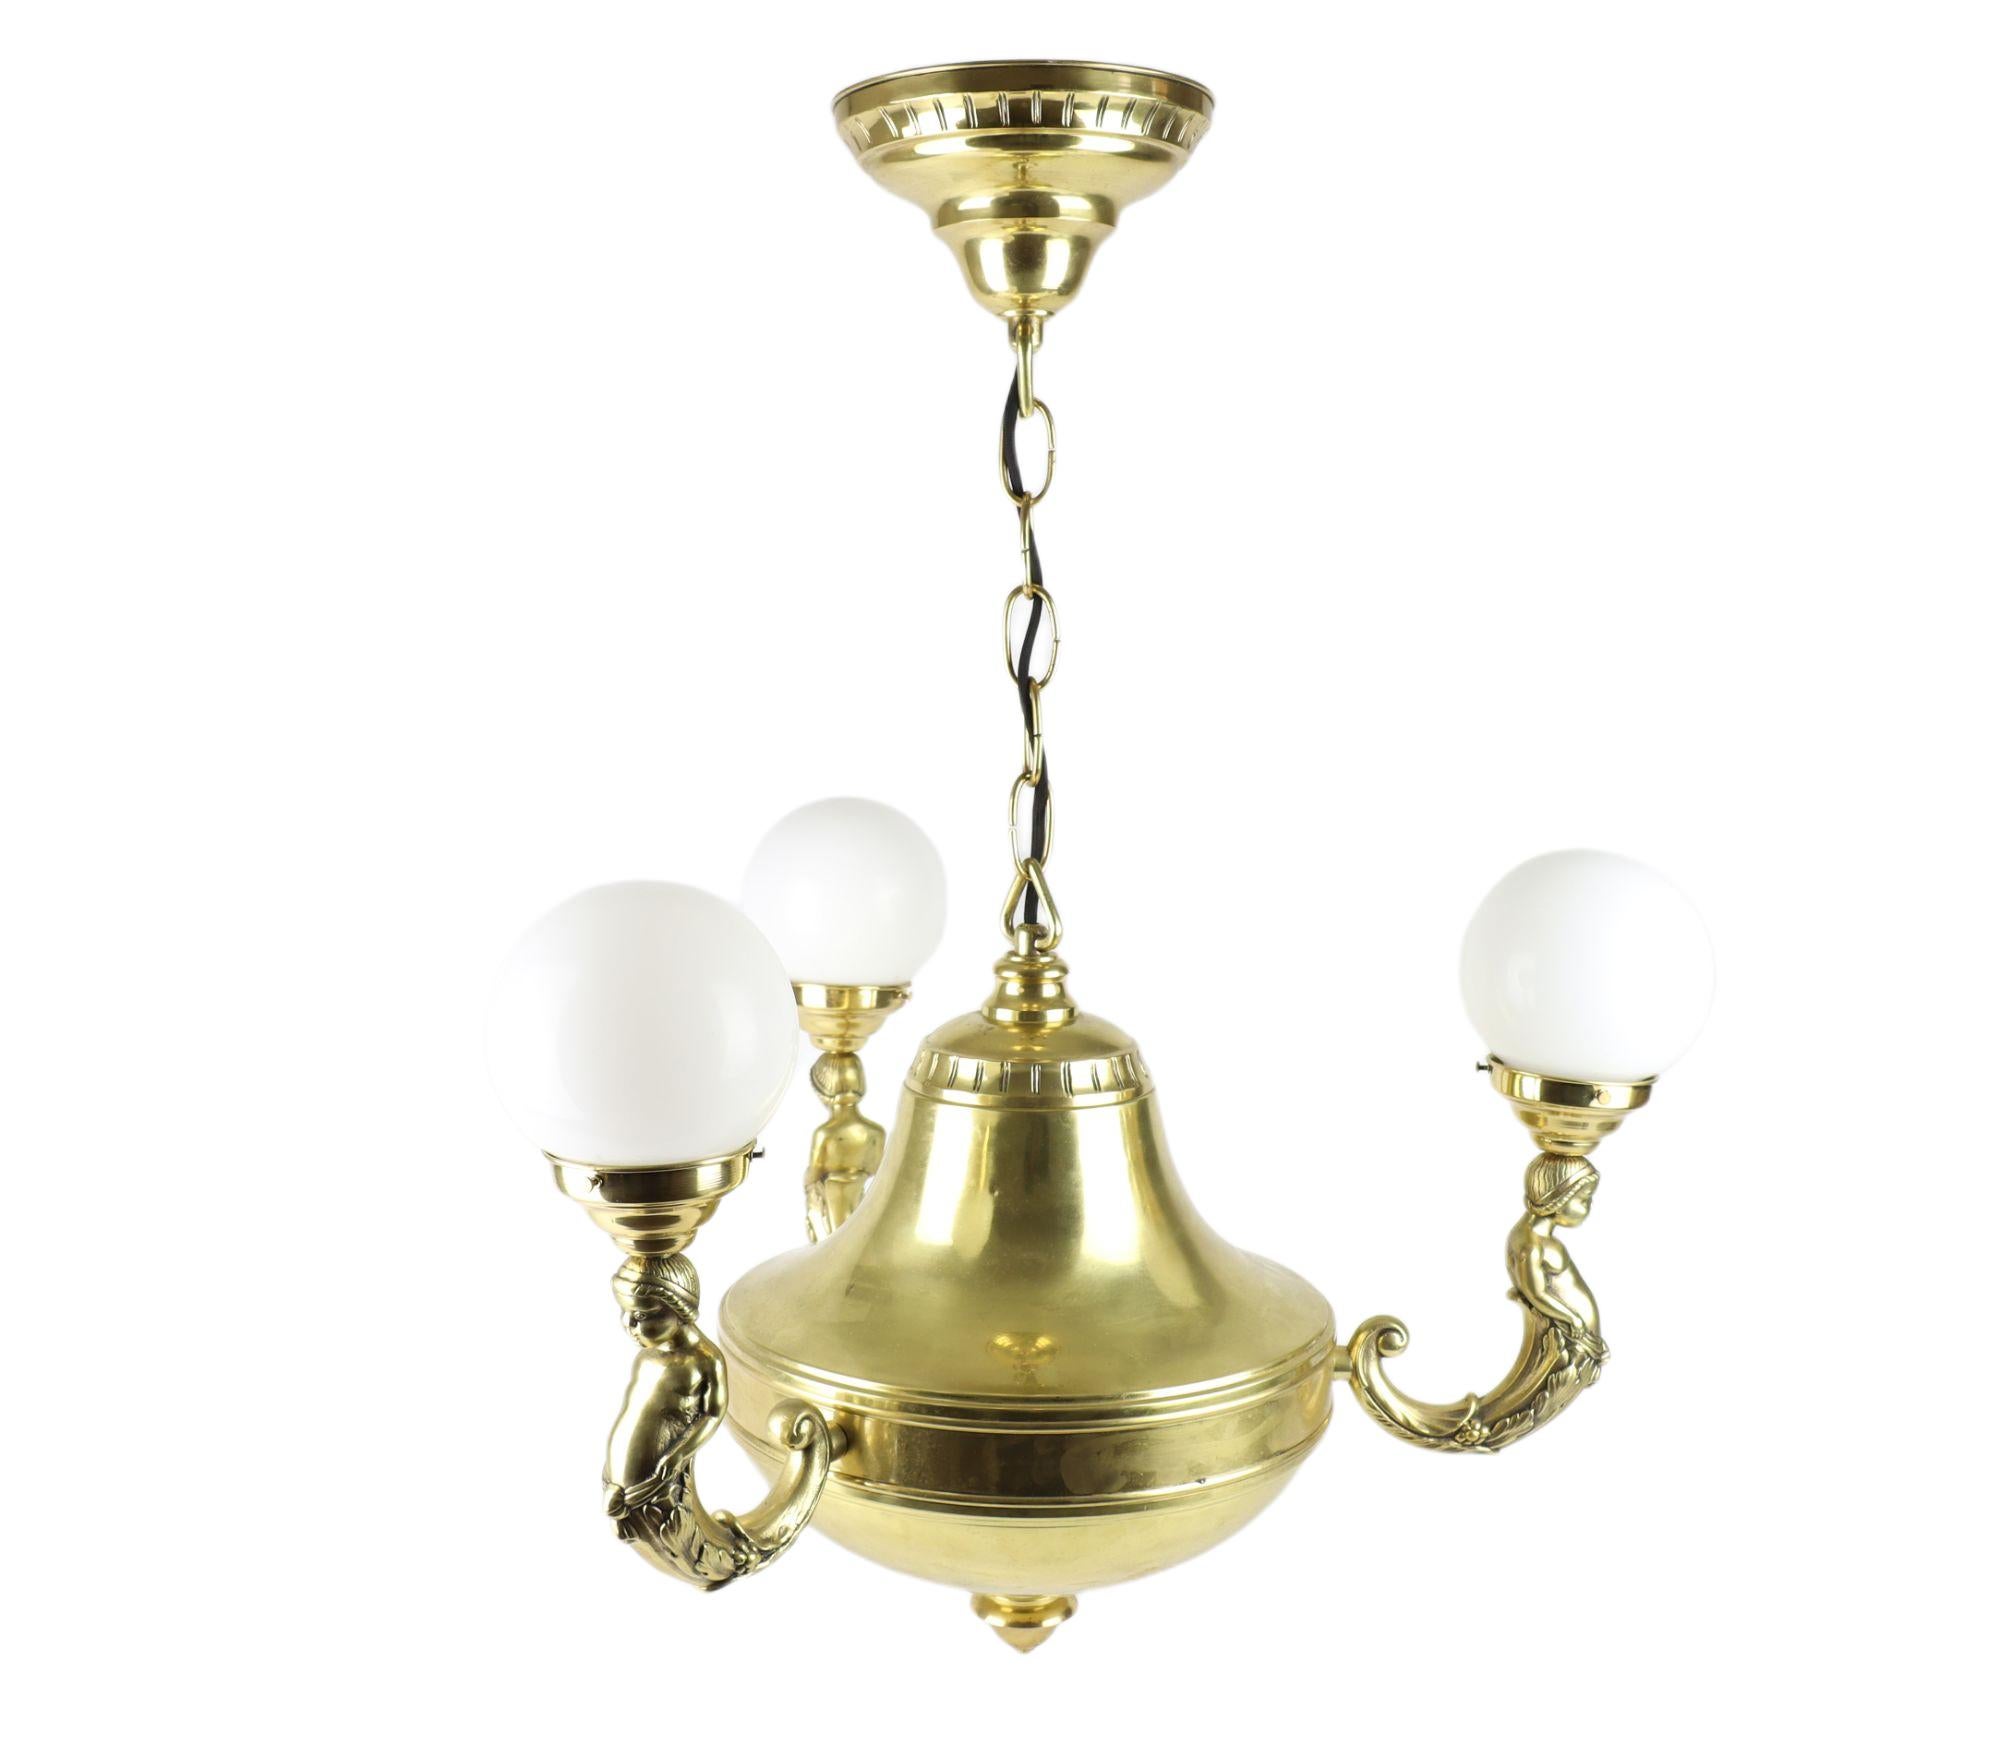 Czech Art Nouveau Brass Representative Figural Chandelier For Sale